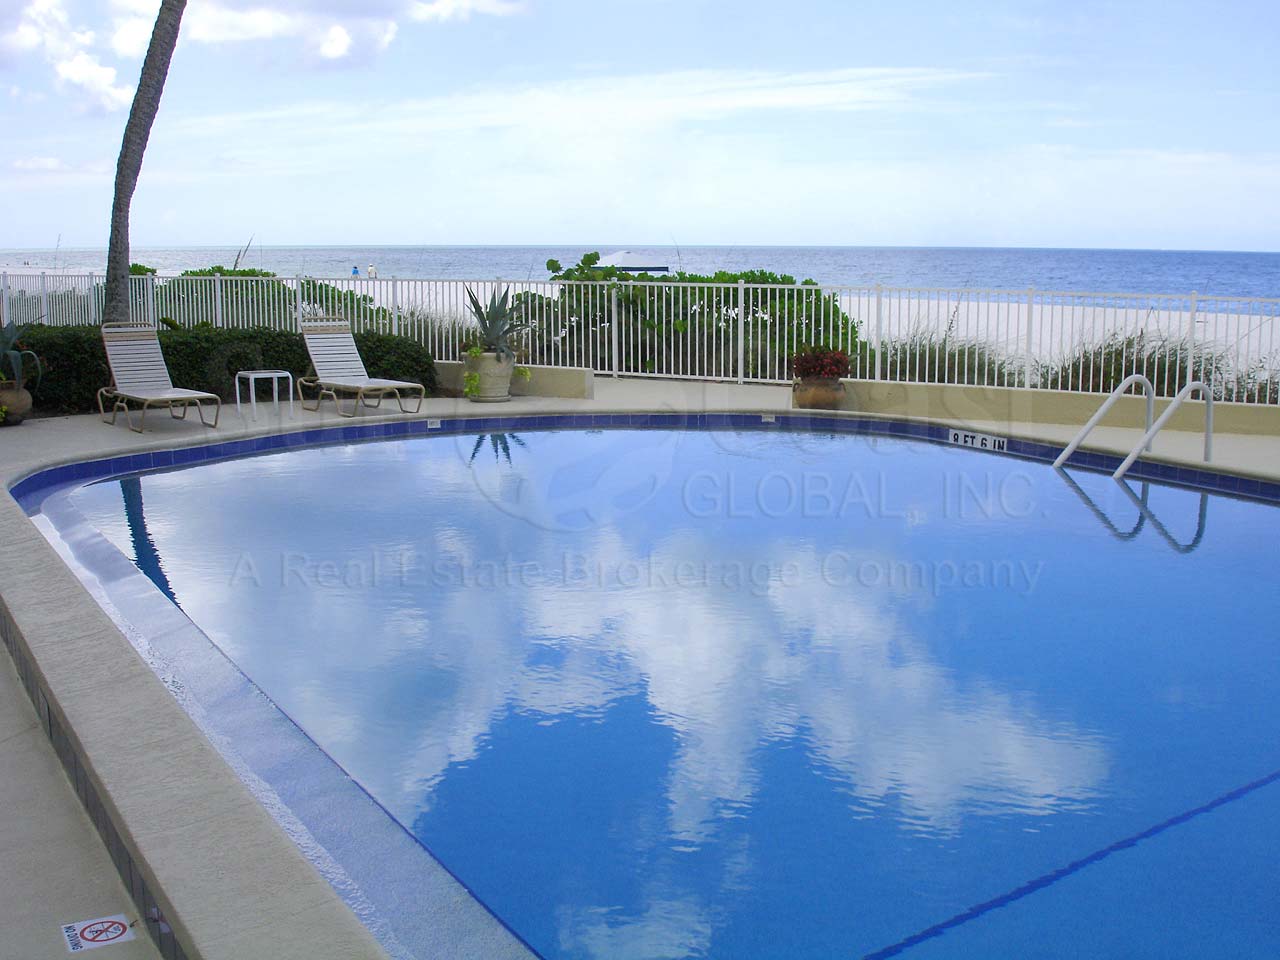 Gulf View Beach Club Community Pool